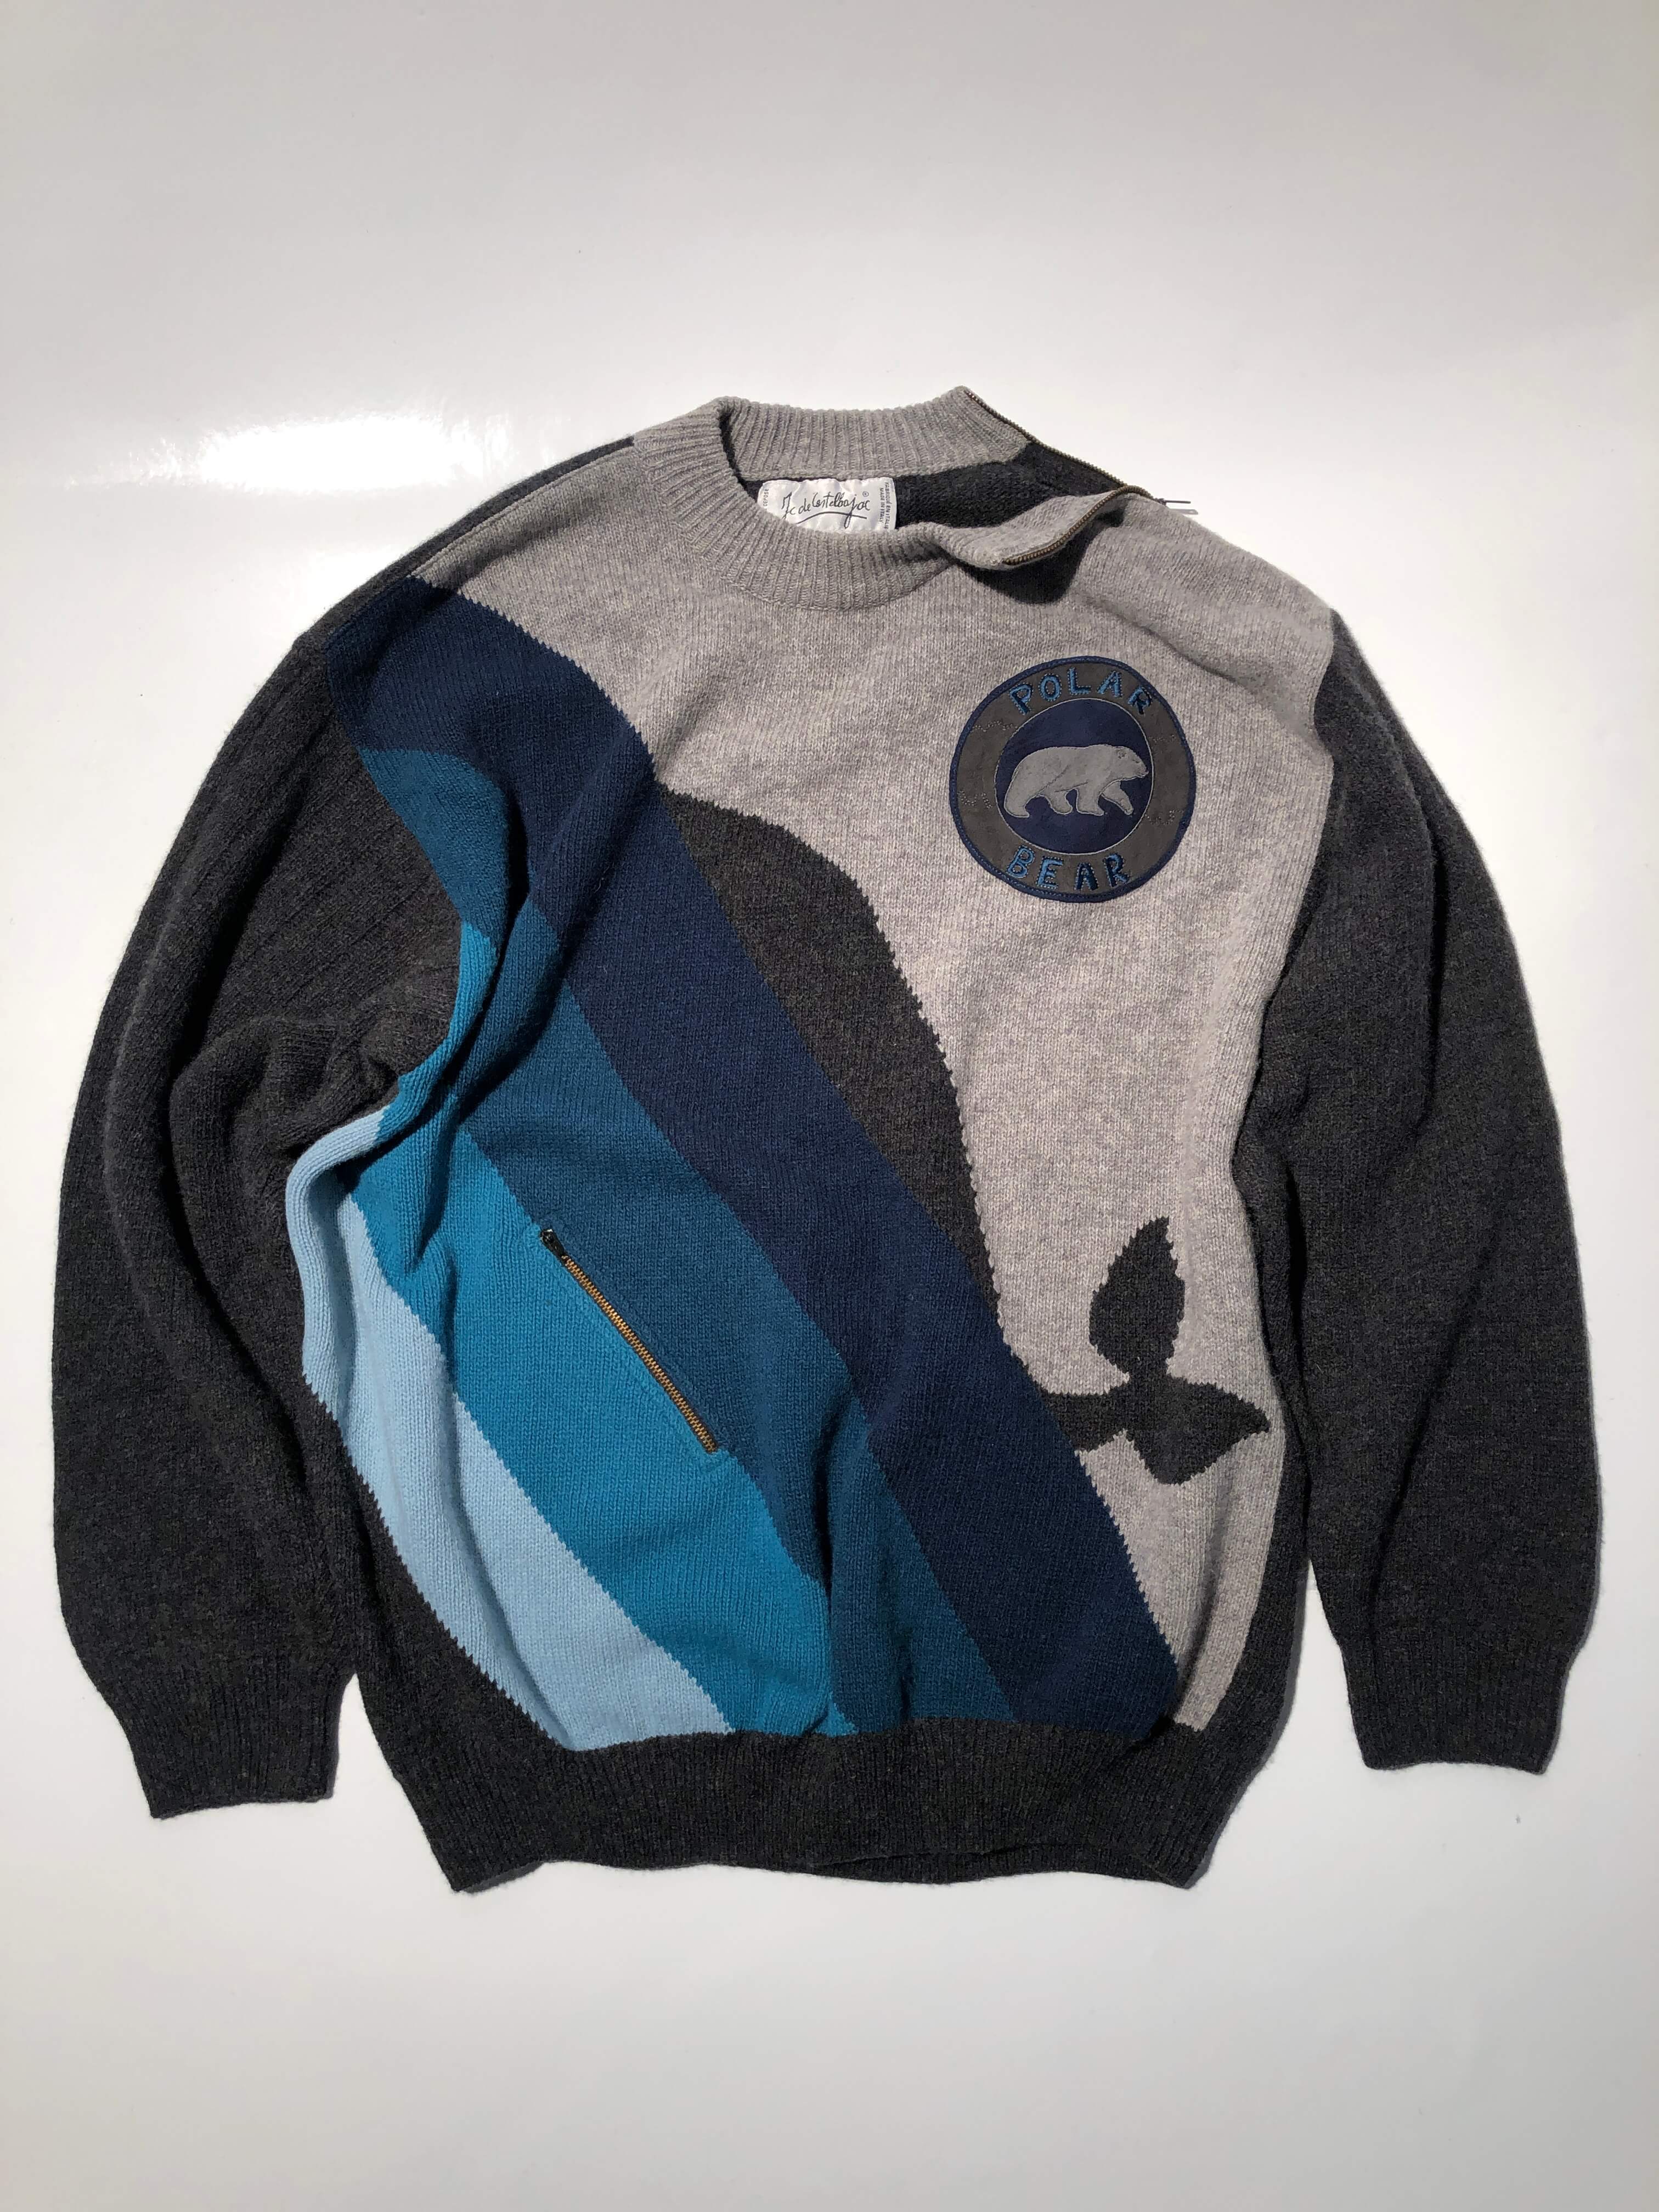 Jean Charles de Castelbajac 90s sweater